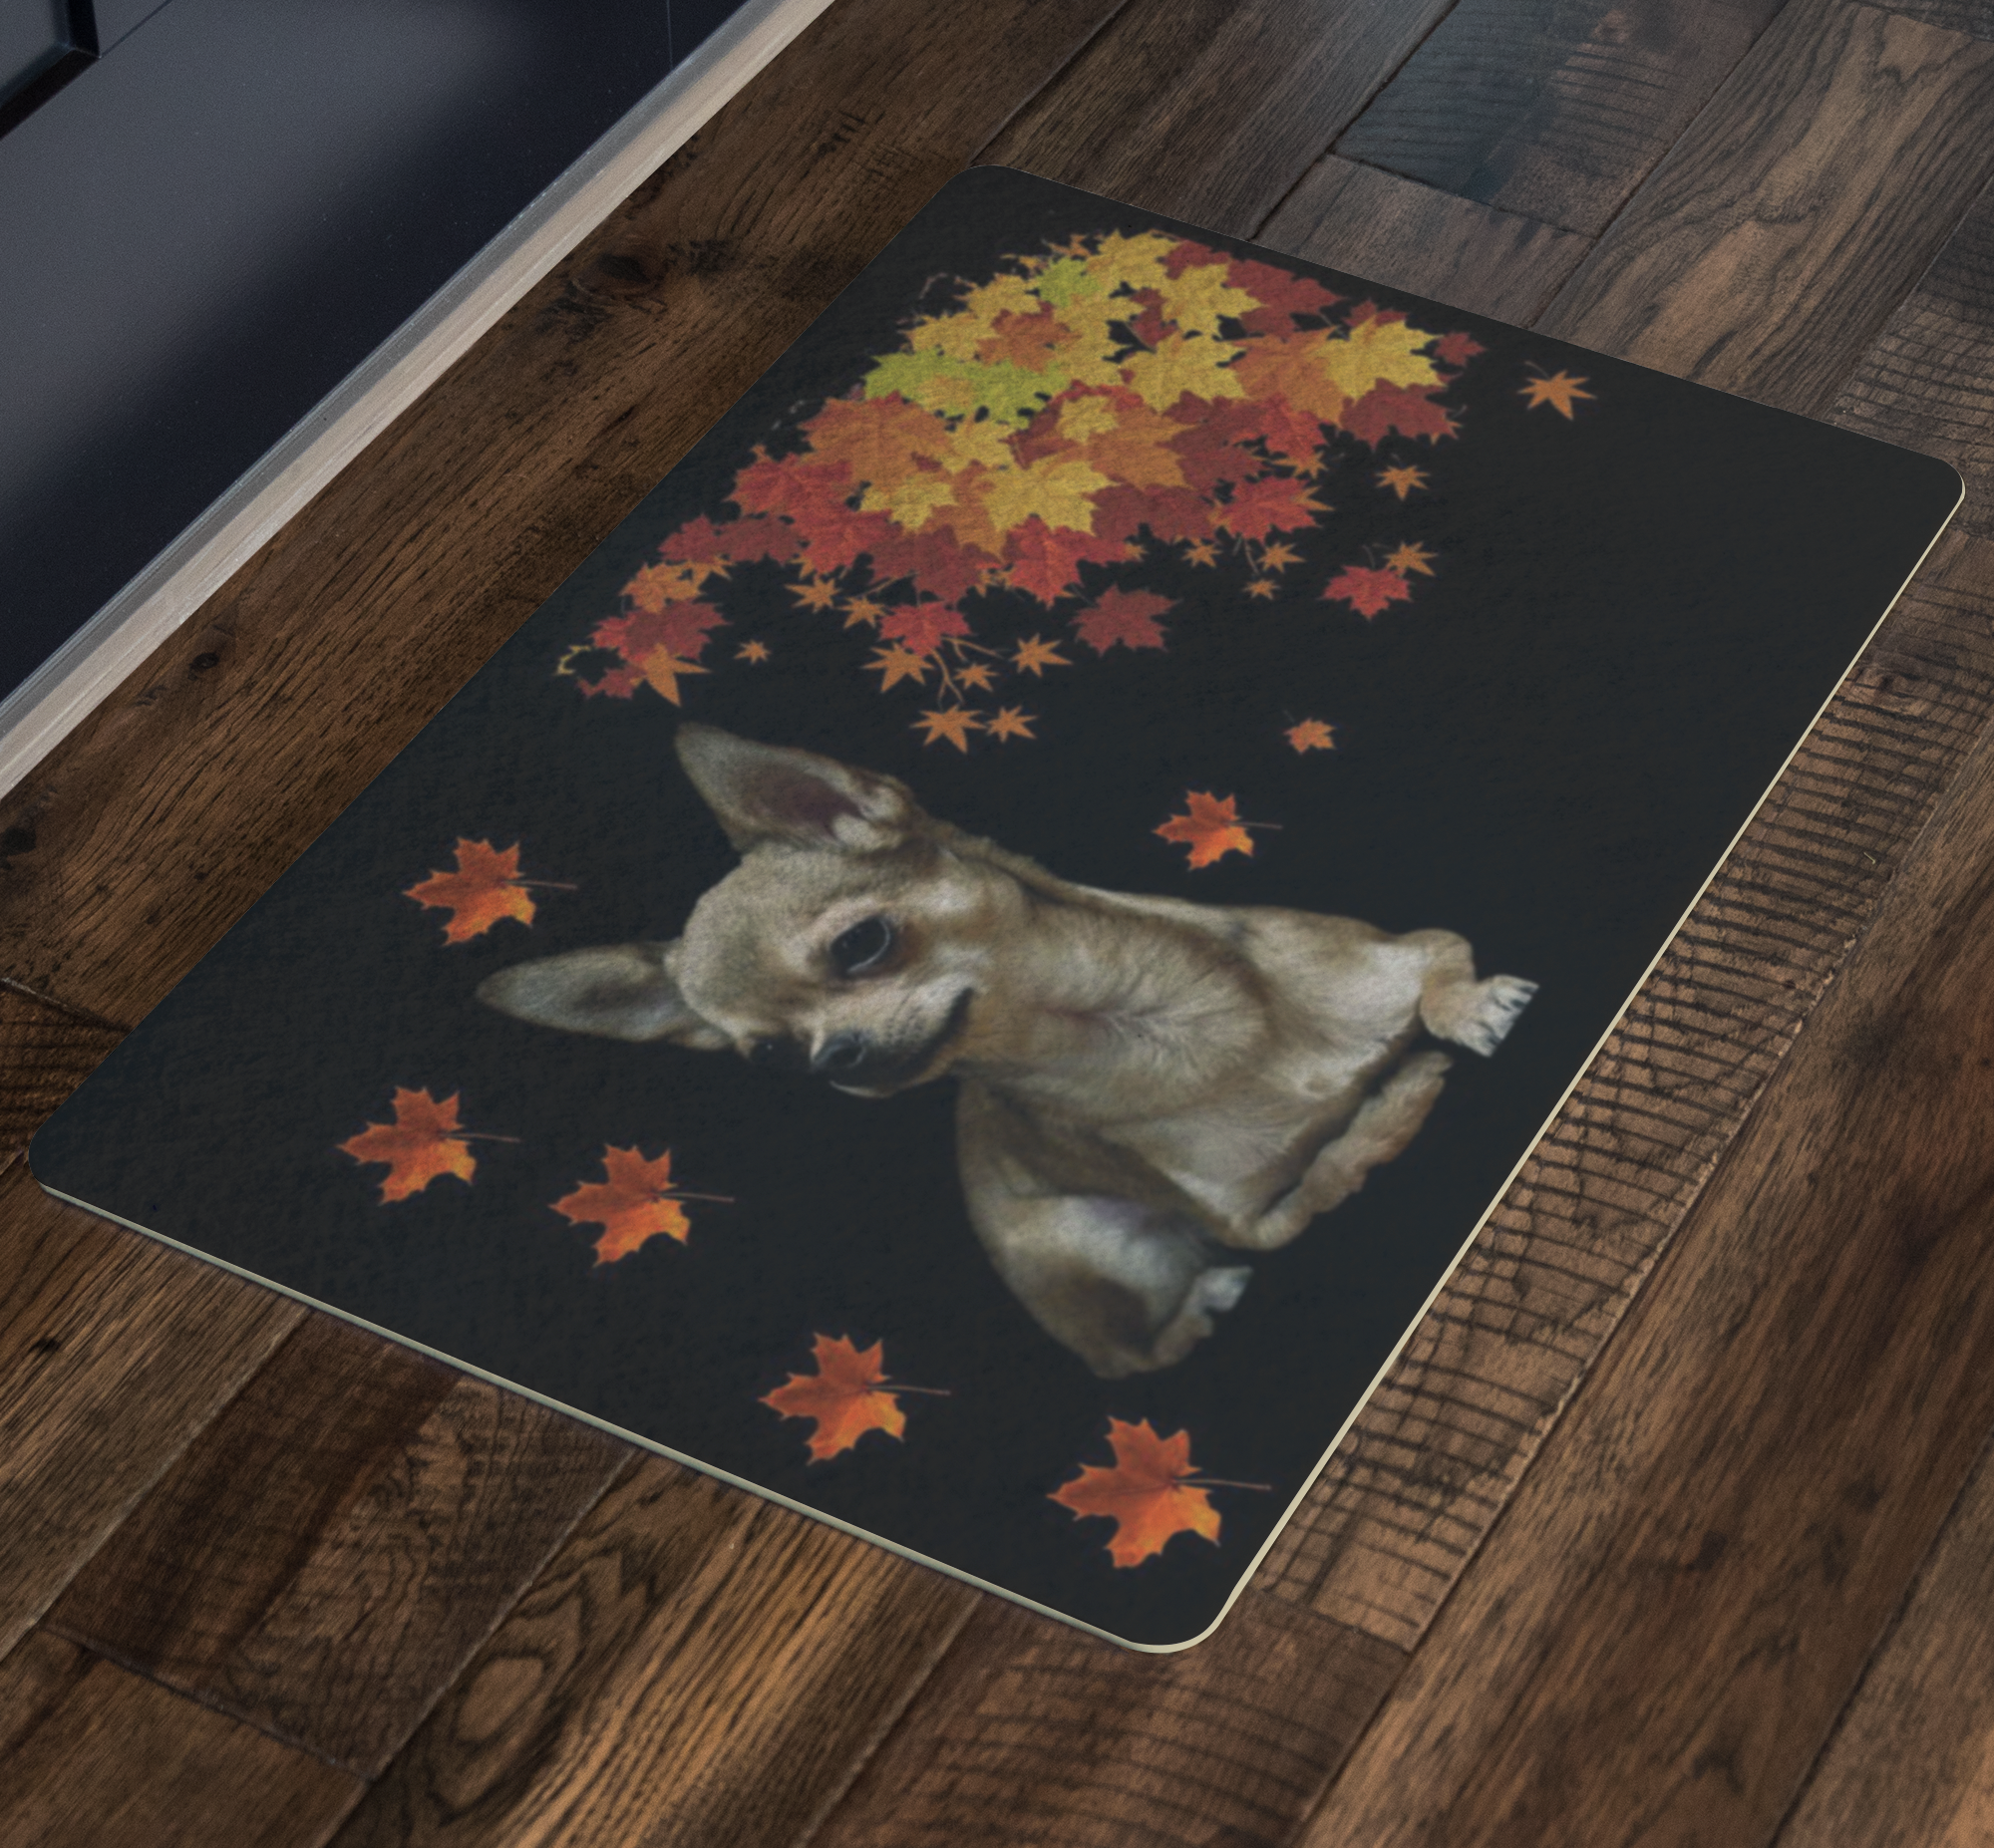 Chihuahua Doormat - Fall